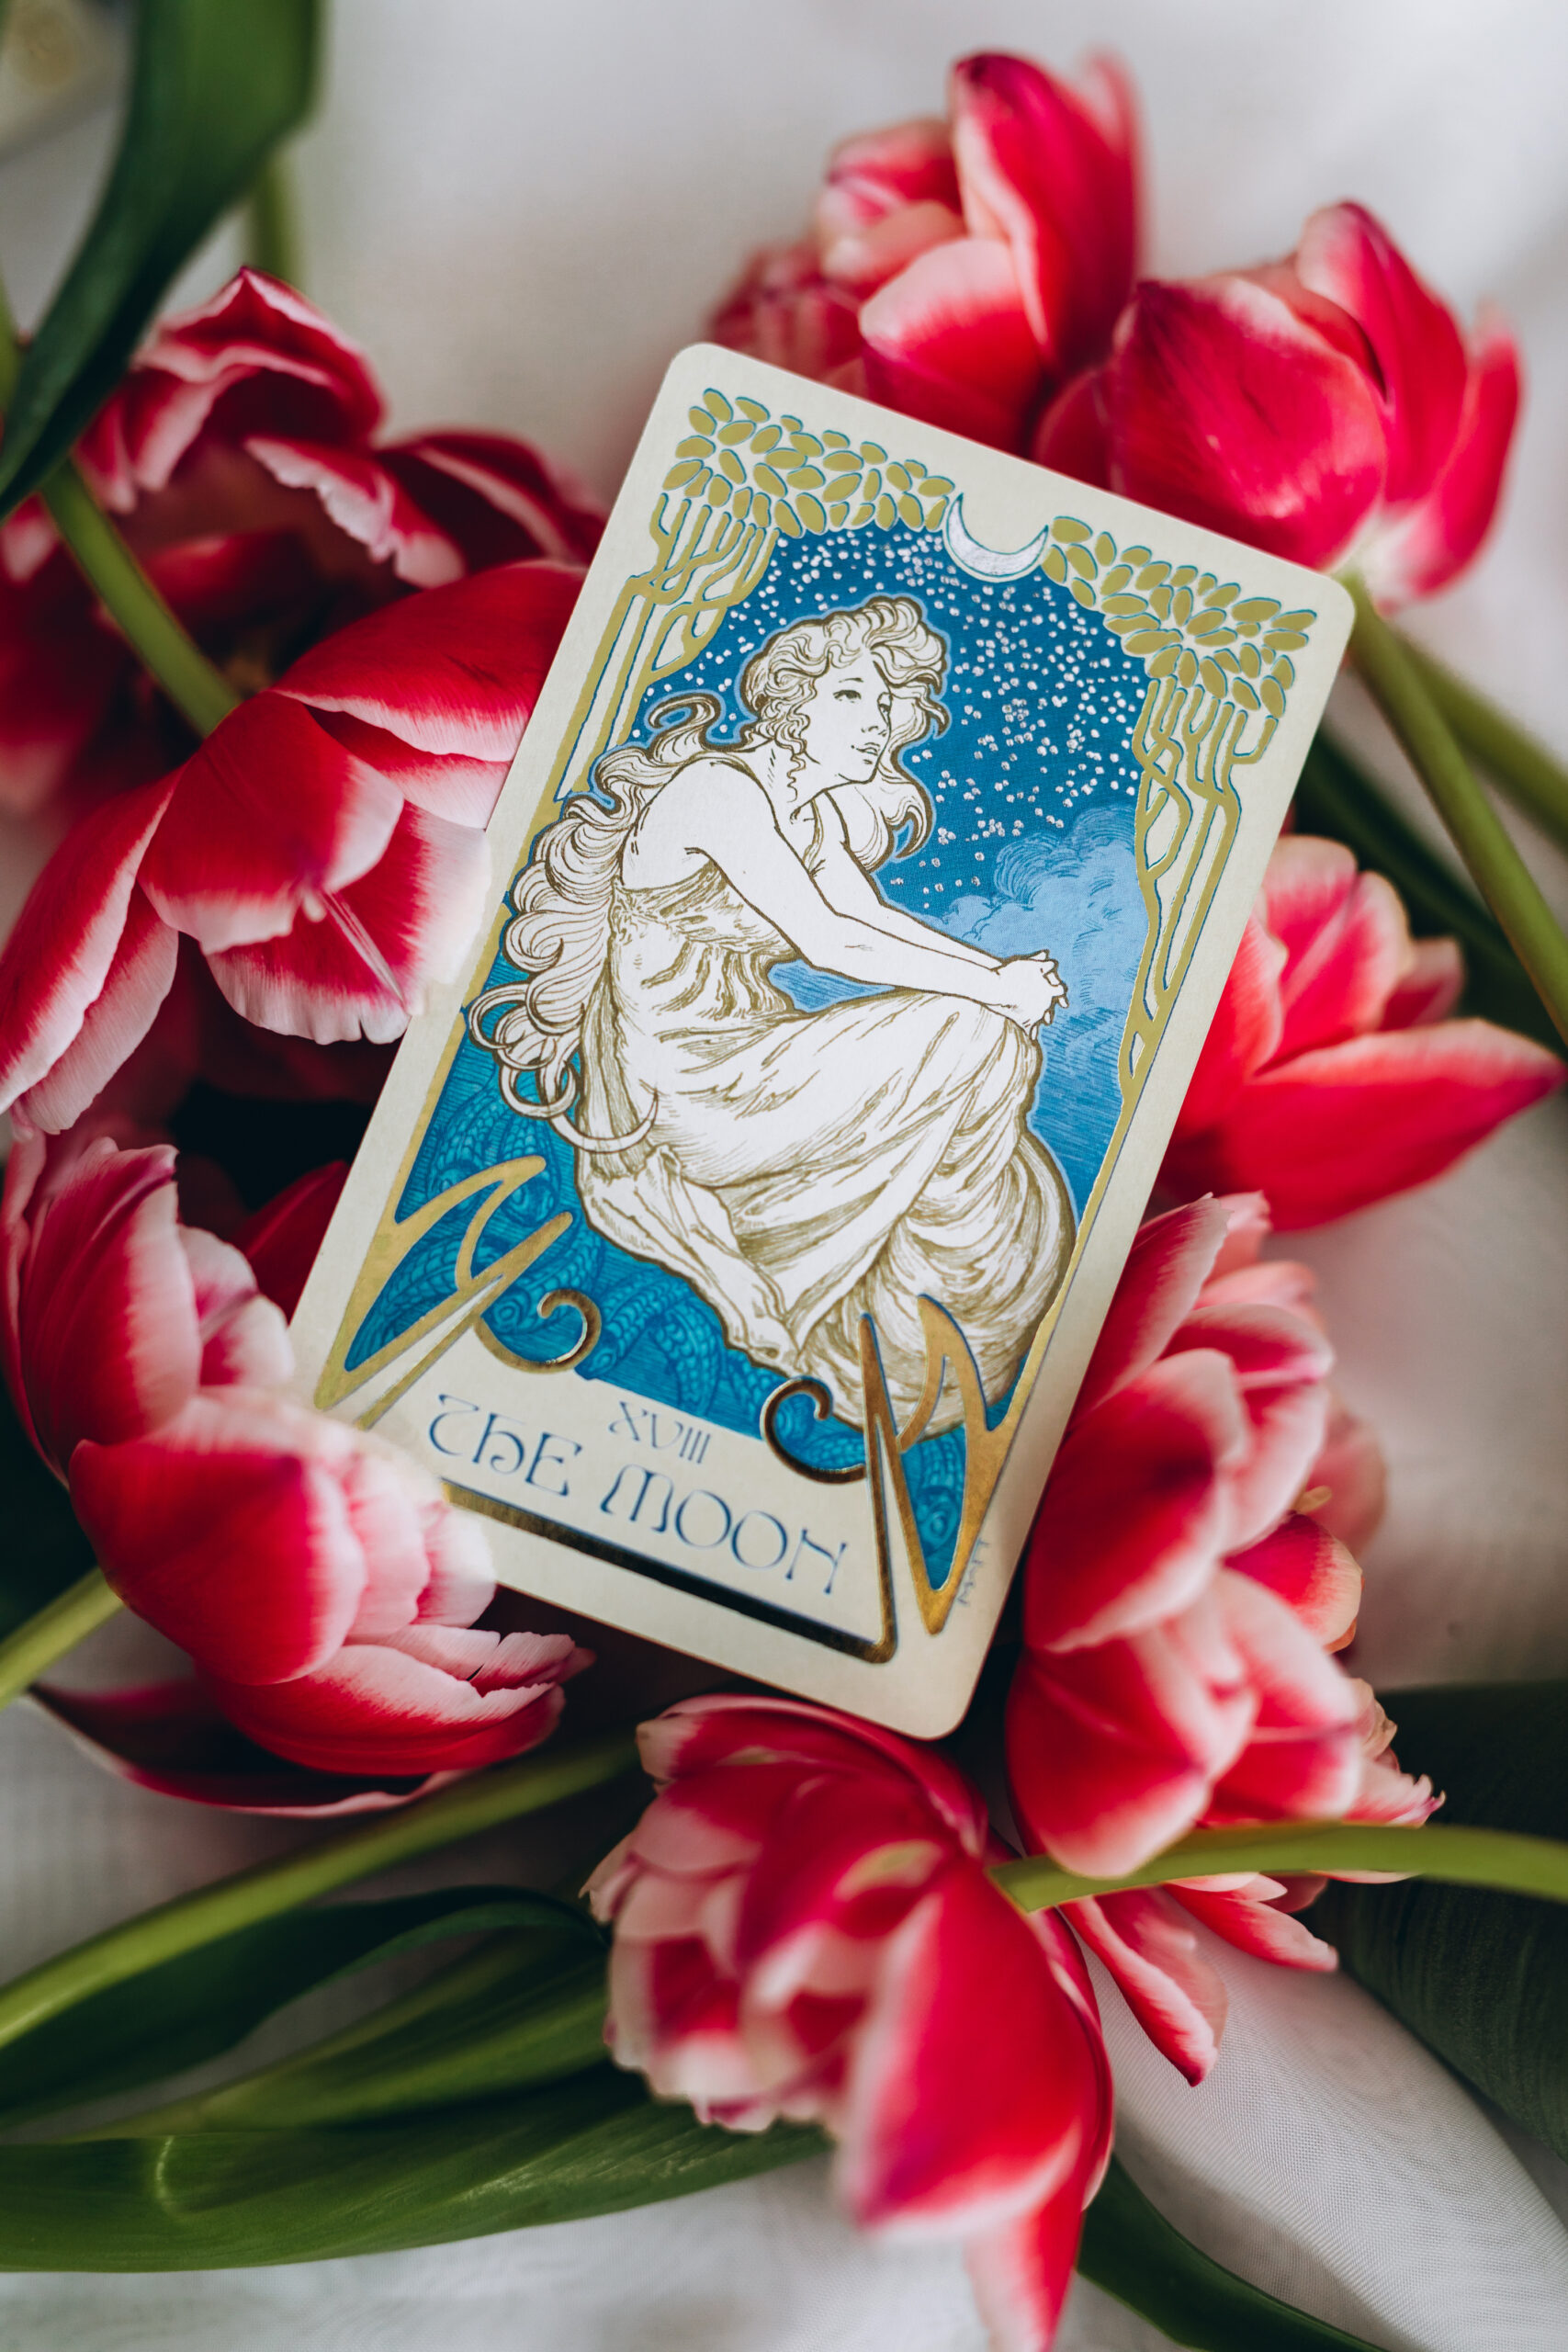 Tarot Card Meanings: The Arcanas Revealed